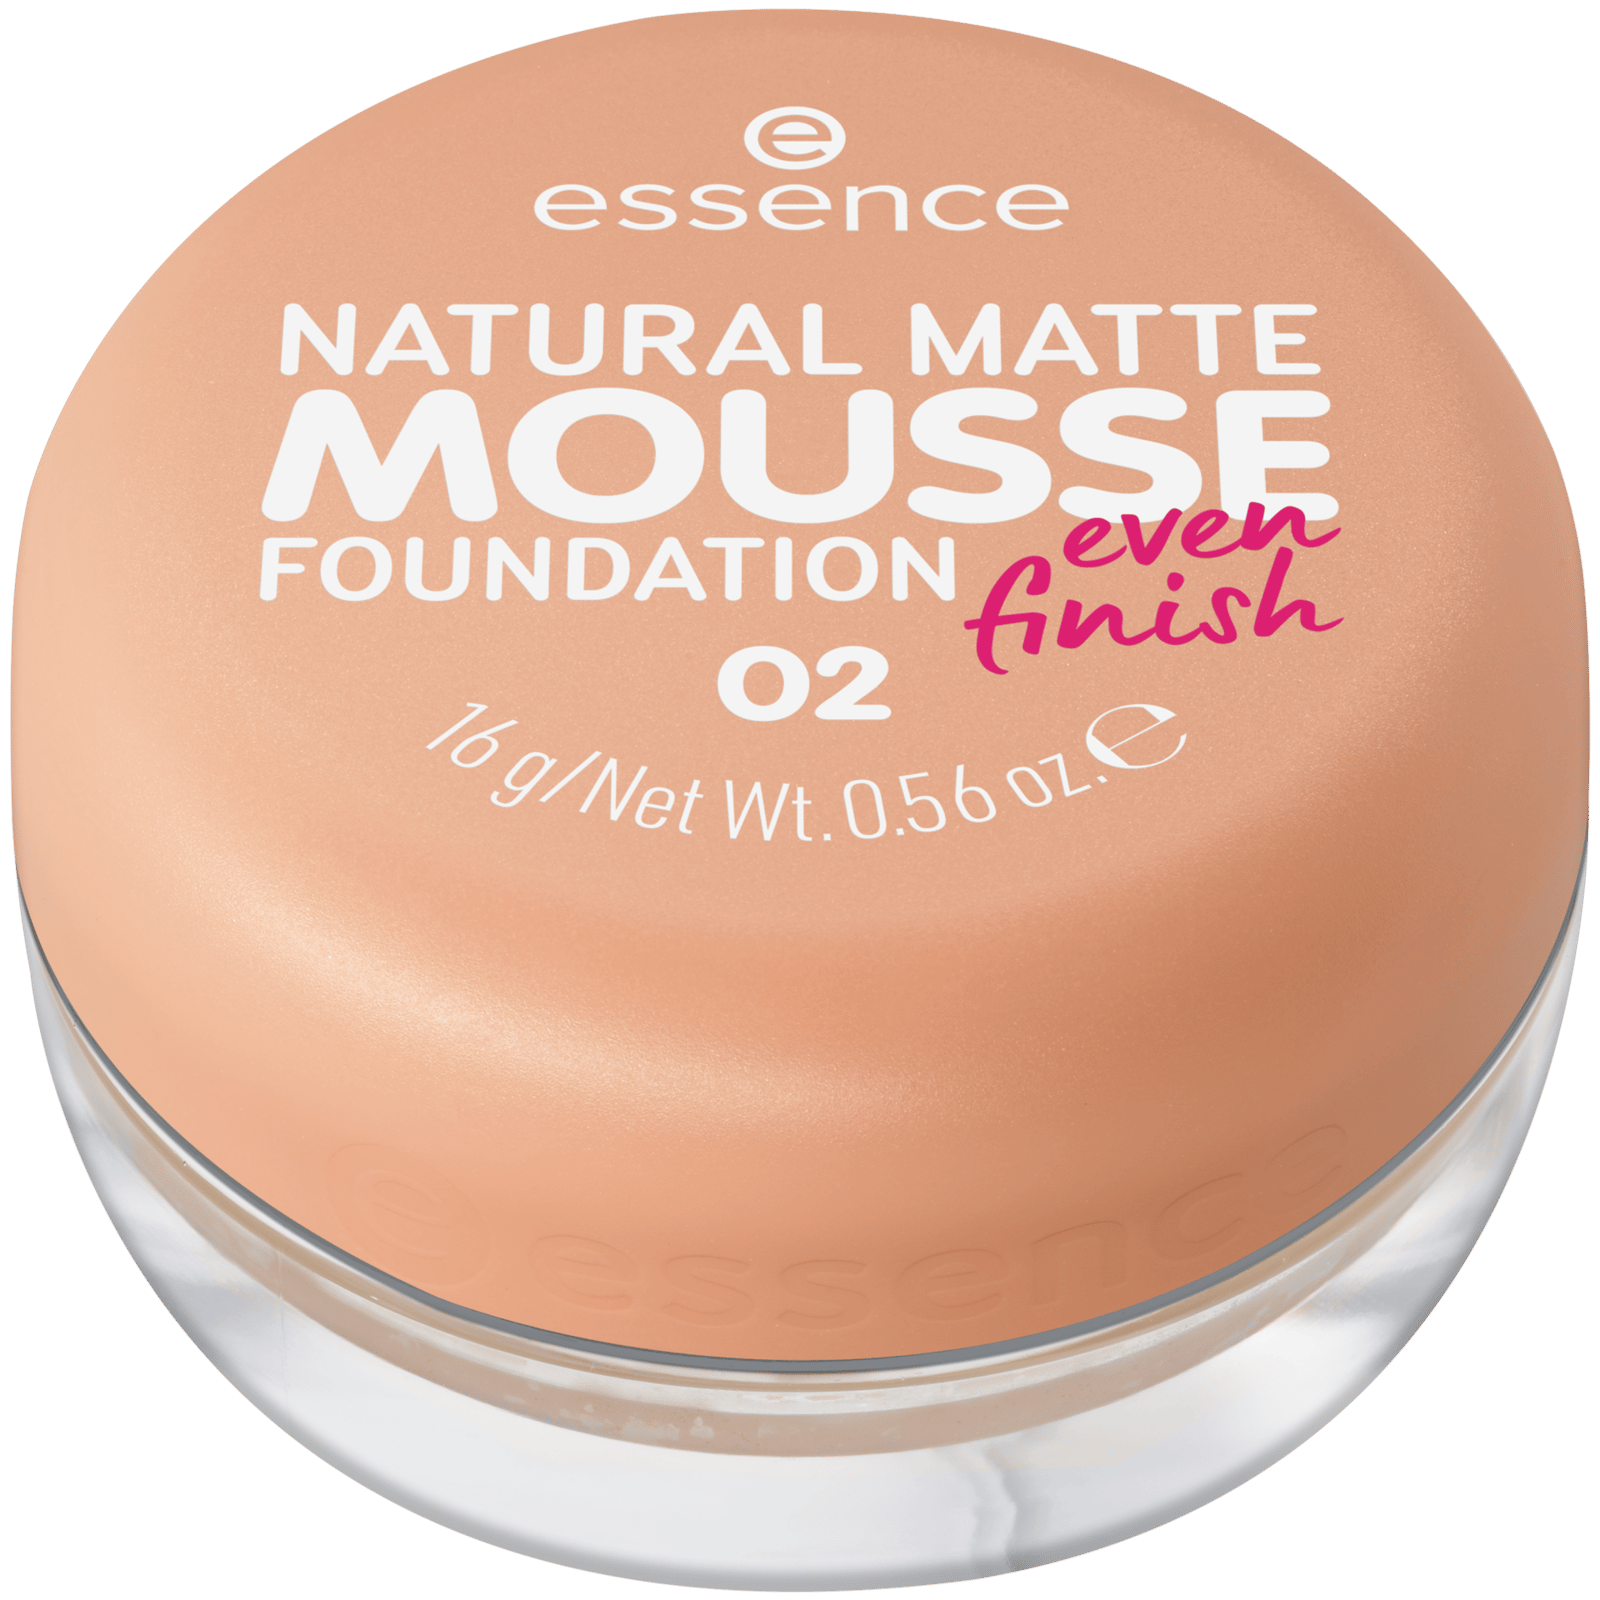 essence Natural Matte Mousse 02 Foundation 16g